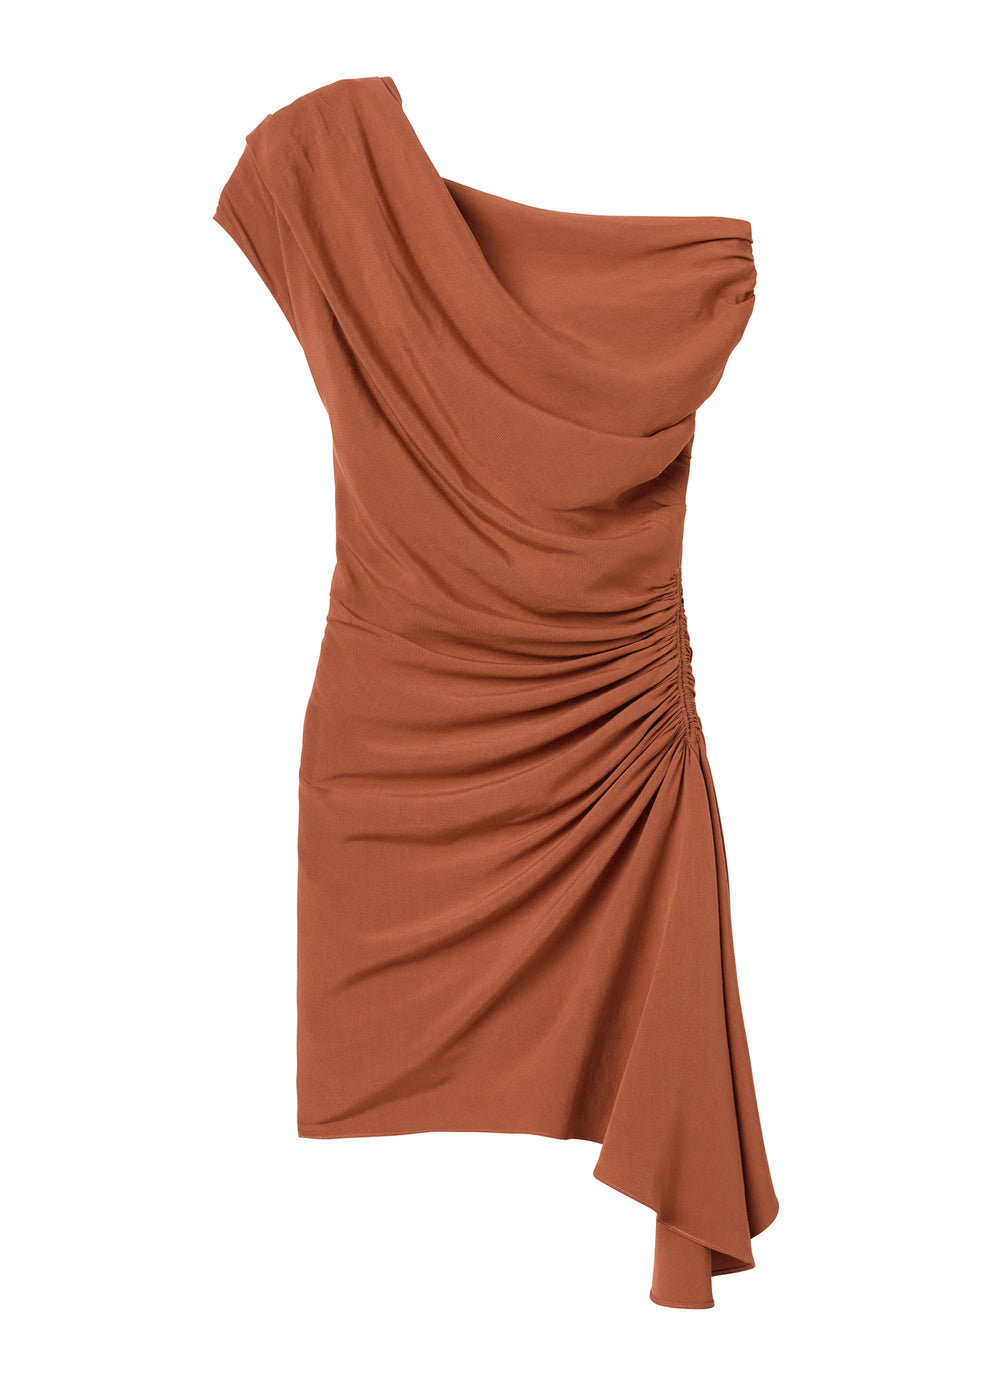 Poppy Linen Dress With Ruffled Sleeves. Sassy, Stylish Linen Dress in  Charcoal Italian Linen. Made in Italy Linen Dress. 